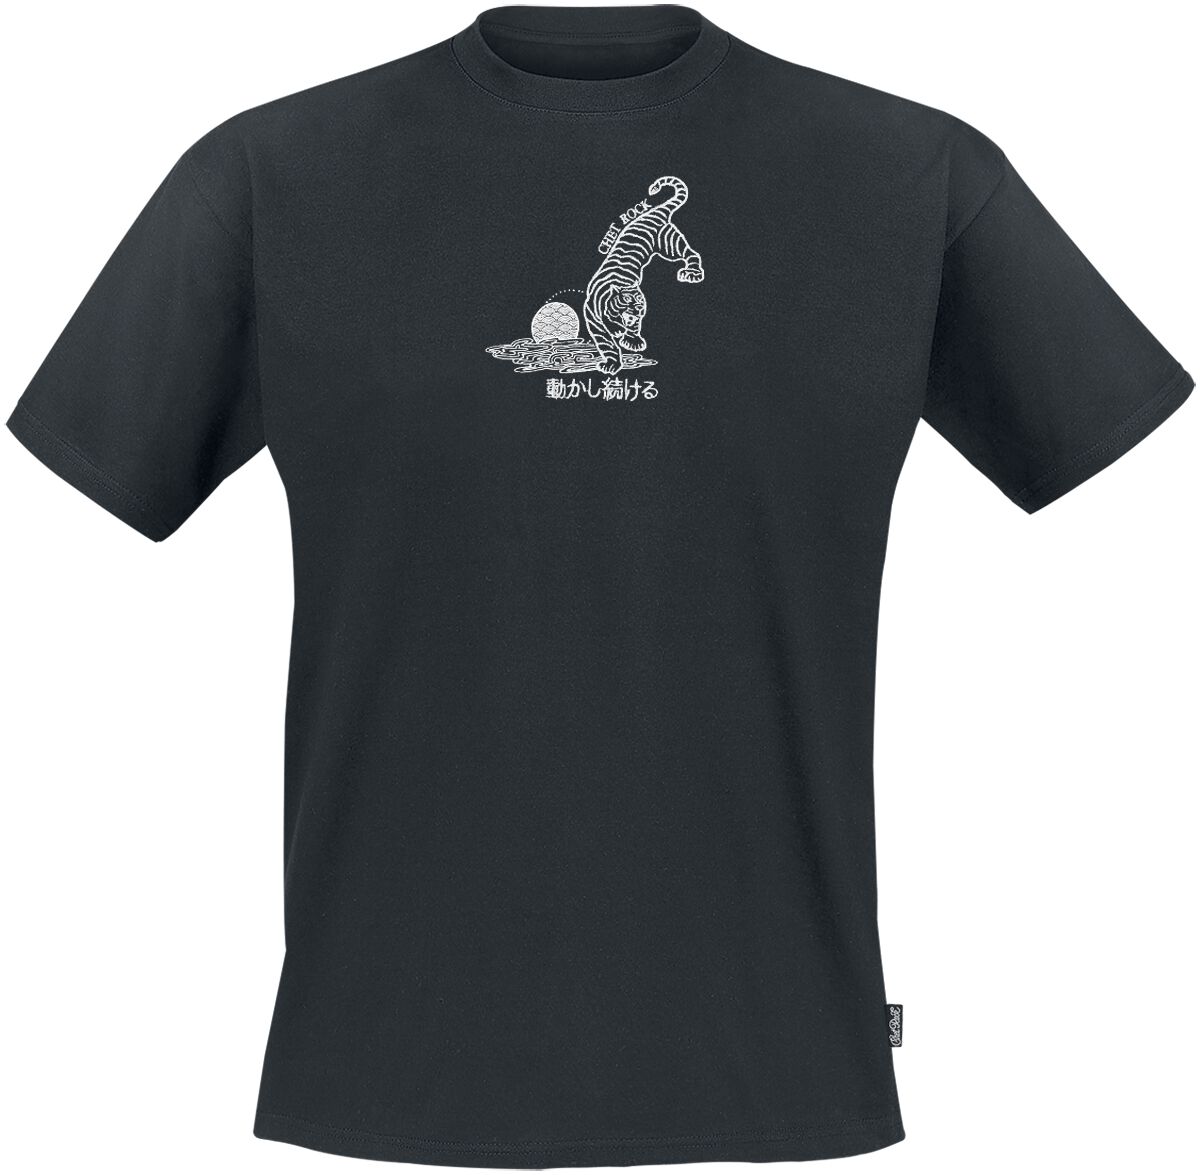 Chet Rock Crouching Tiger T-Shirt schwarz in XXL